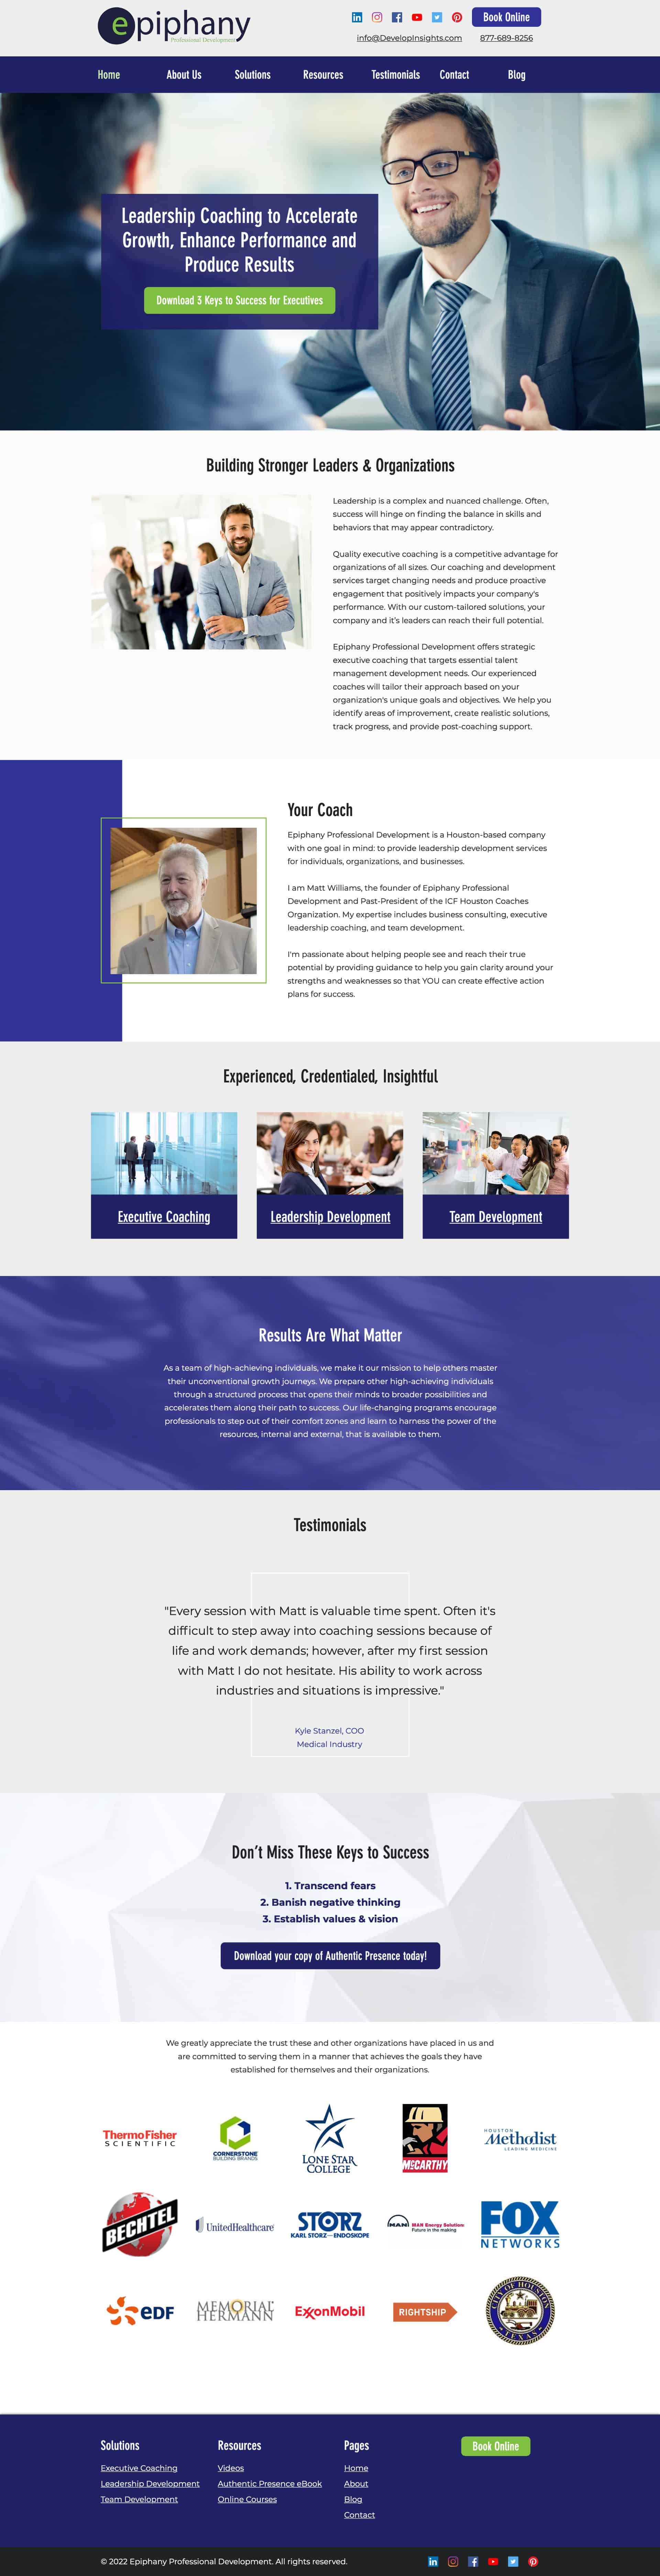 Epiphany Professional Development Website Full